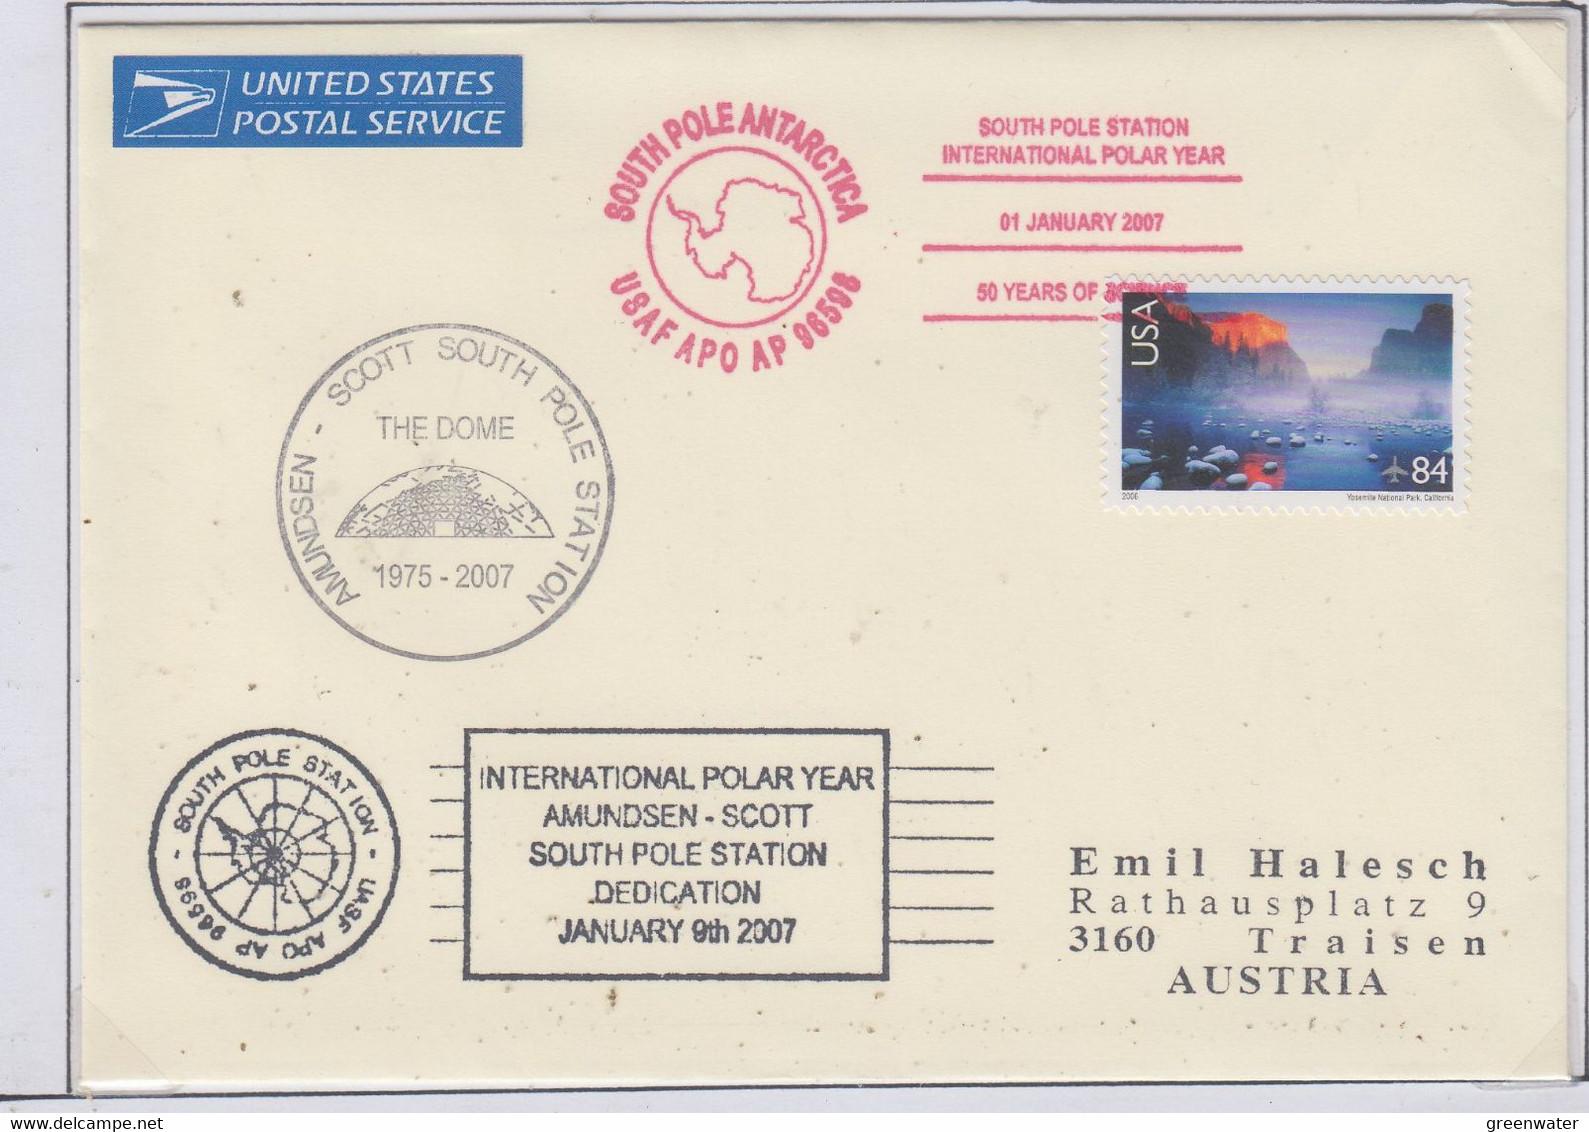 USA  South Pole Cover International Polar Year  Ca South Pole Station 01 JANUARY 2007 (PS191A) - International Polar Year